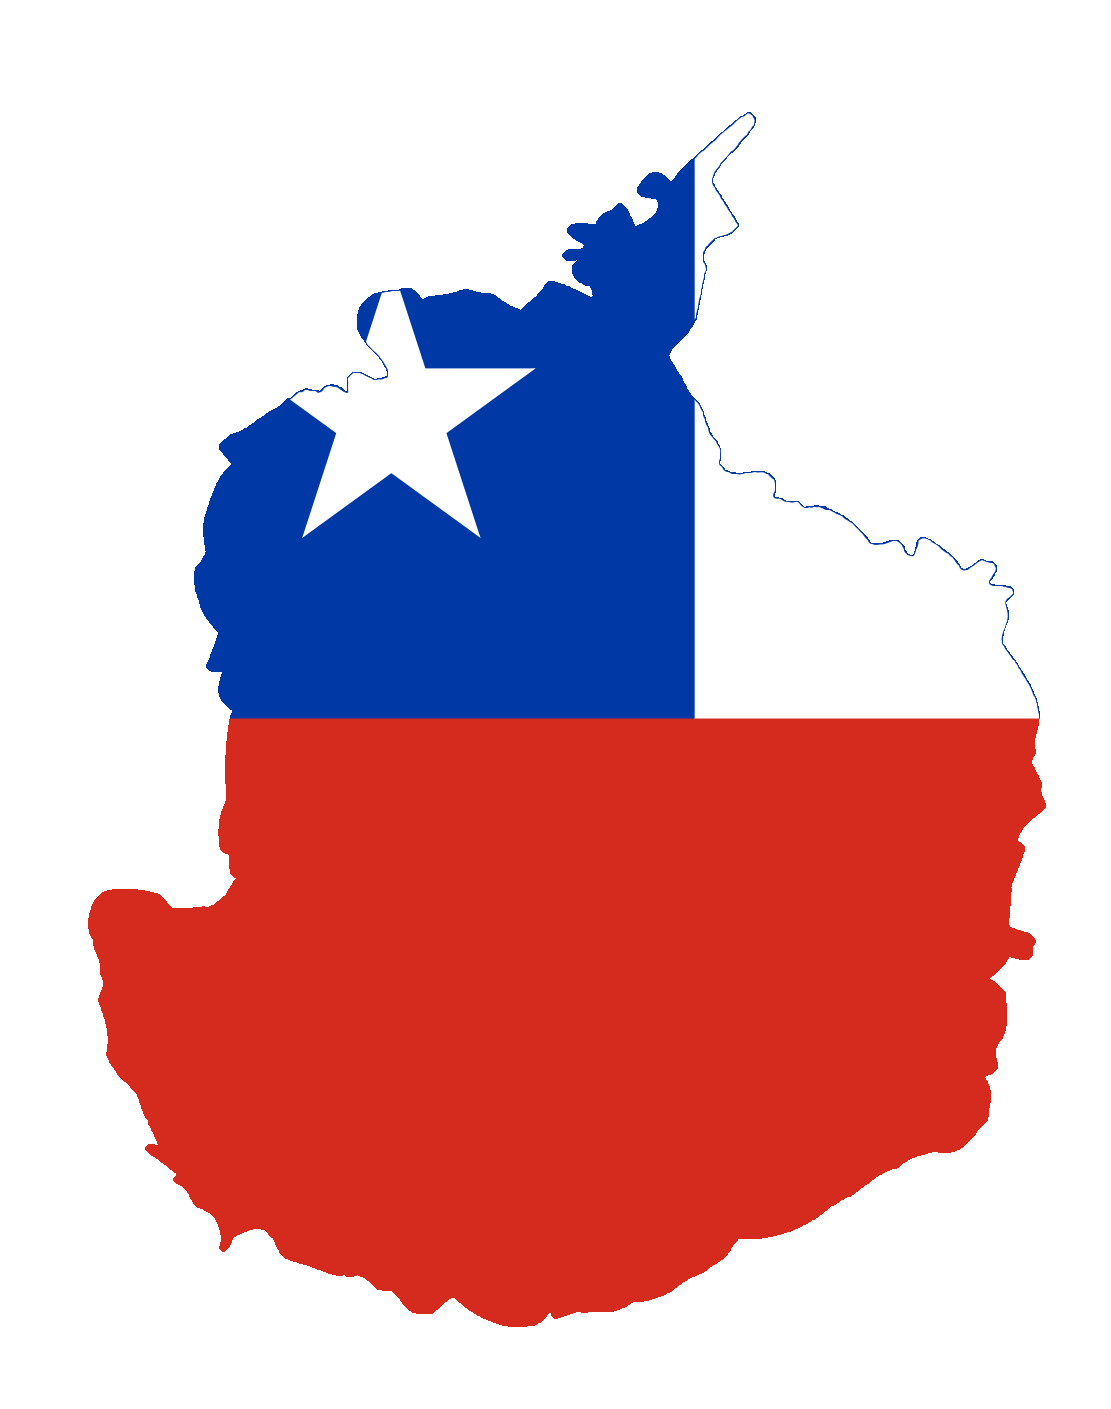 Chile MAp Flag PNG HD Transparent pngteam.com